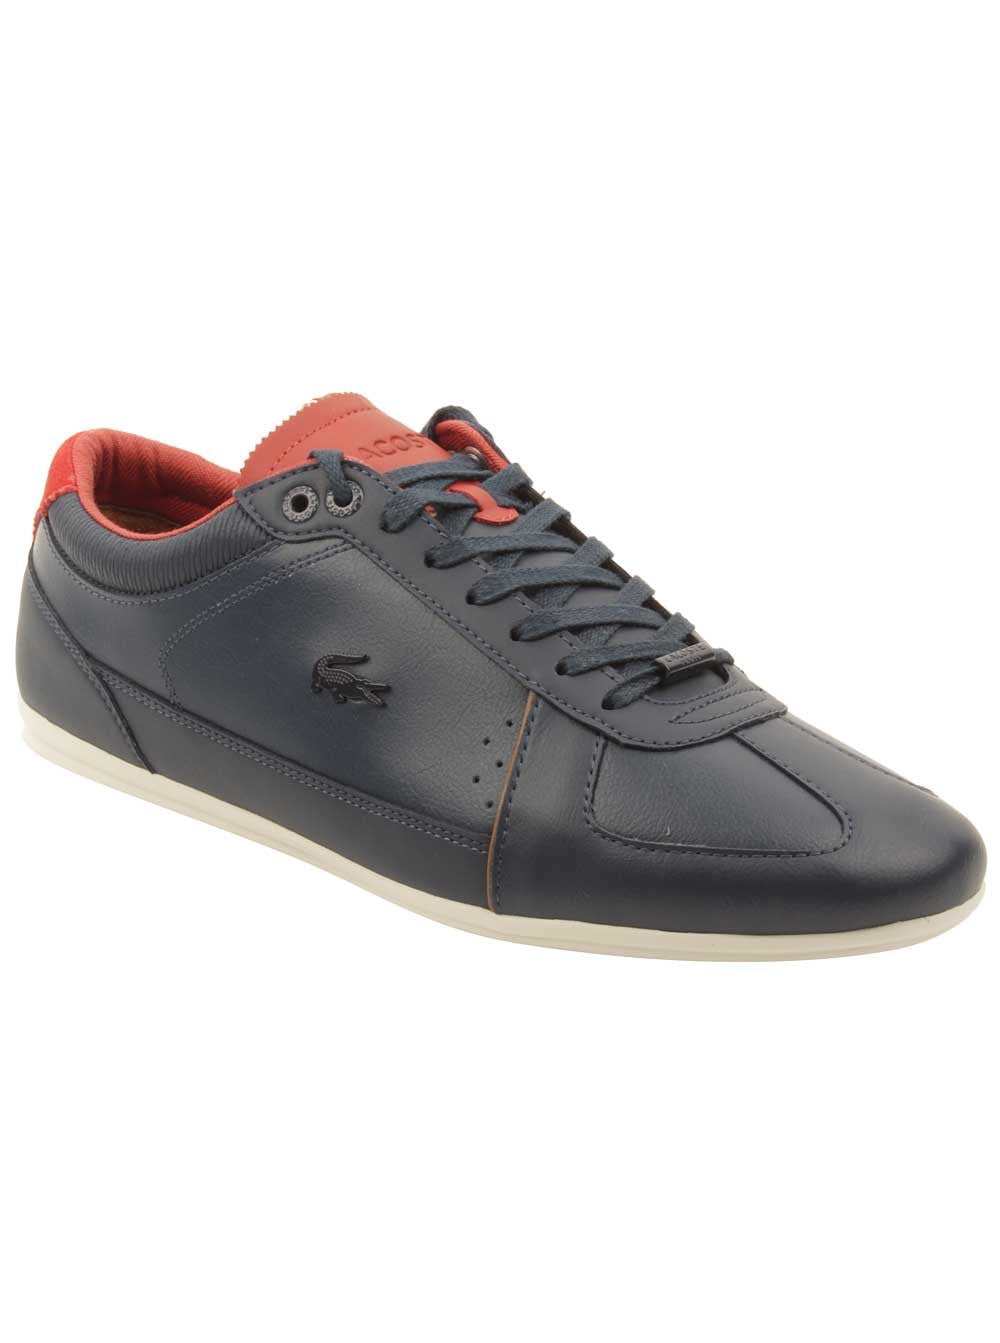 Lacoste Men's Evara 318 2 Cam Casual Shoe 